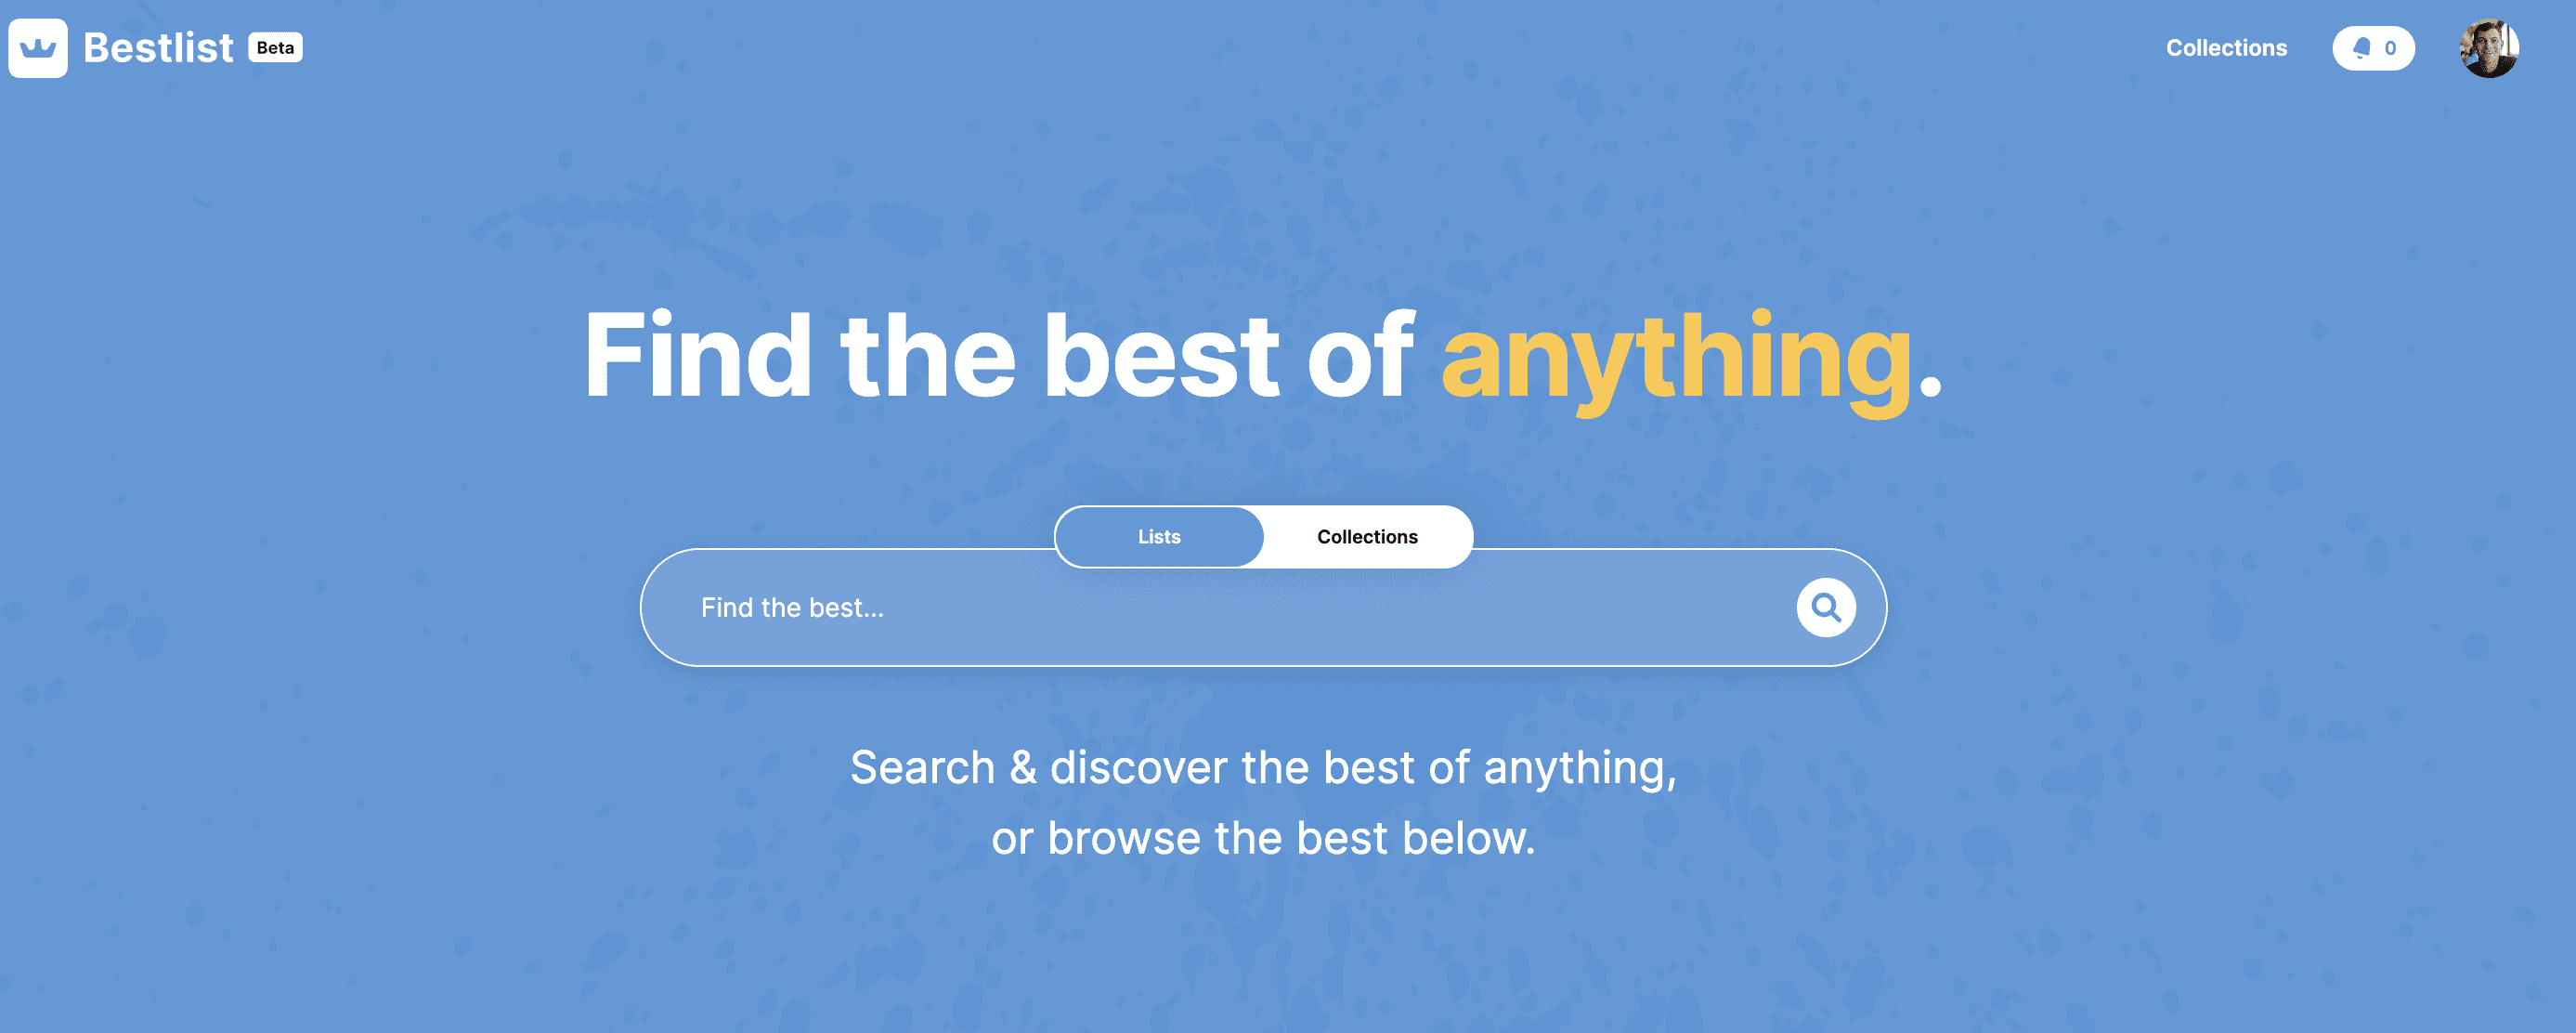 A screenshot of the Bestlist.com homepage